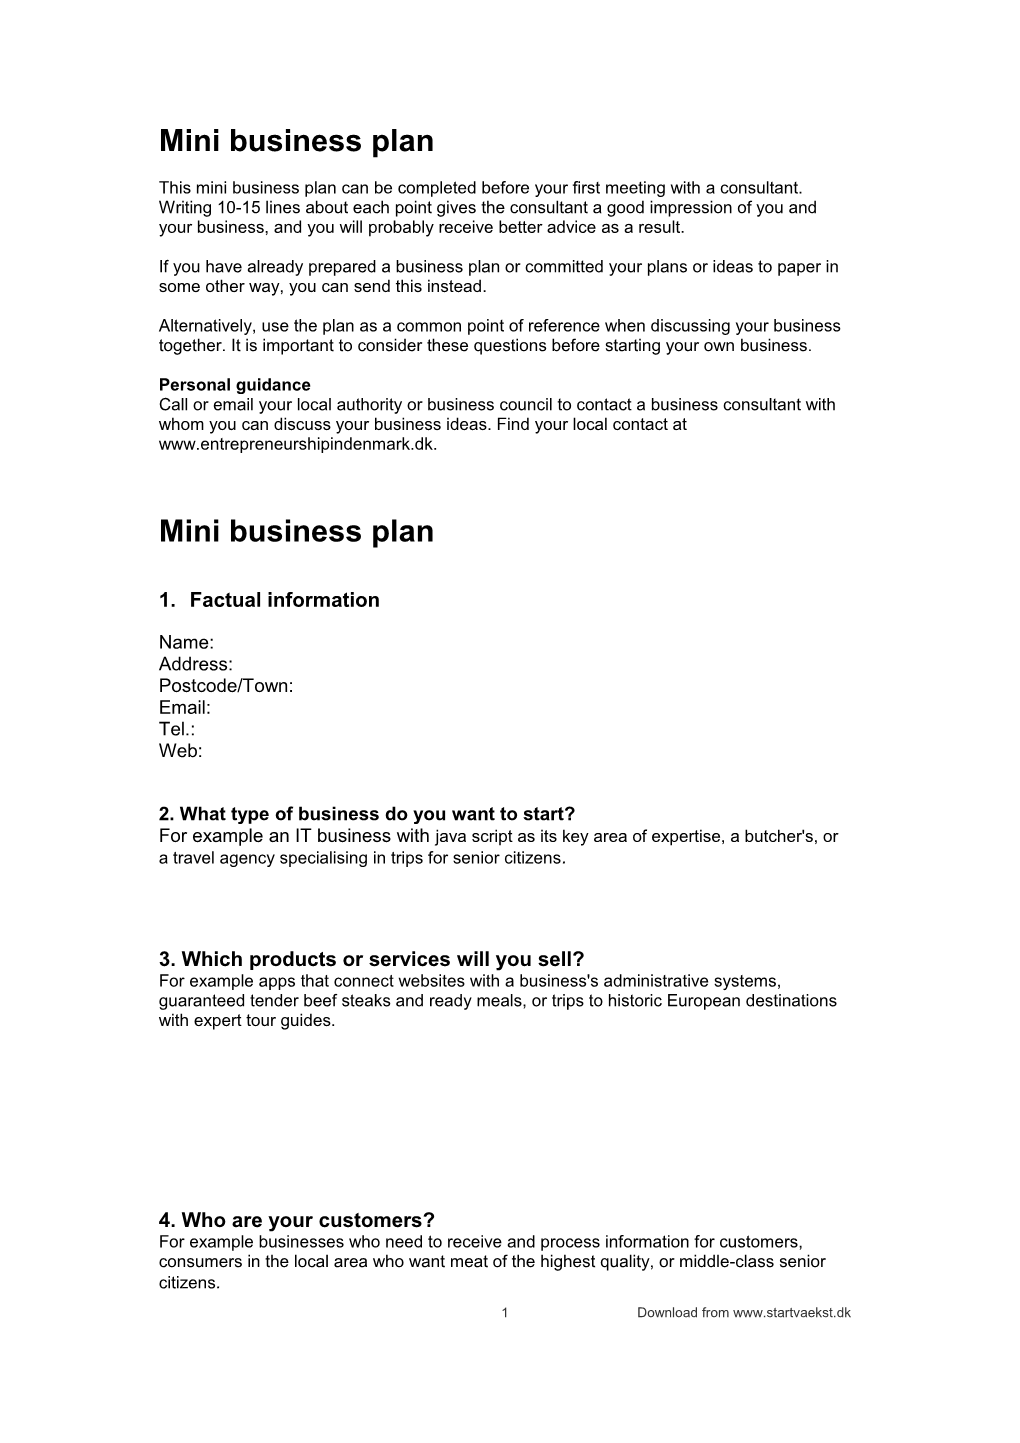 Mini Business Plan